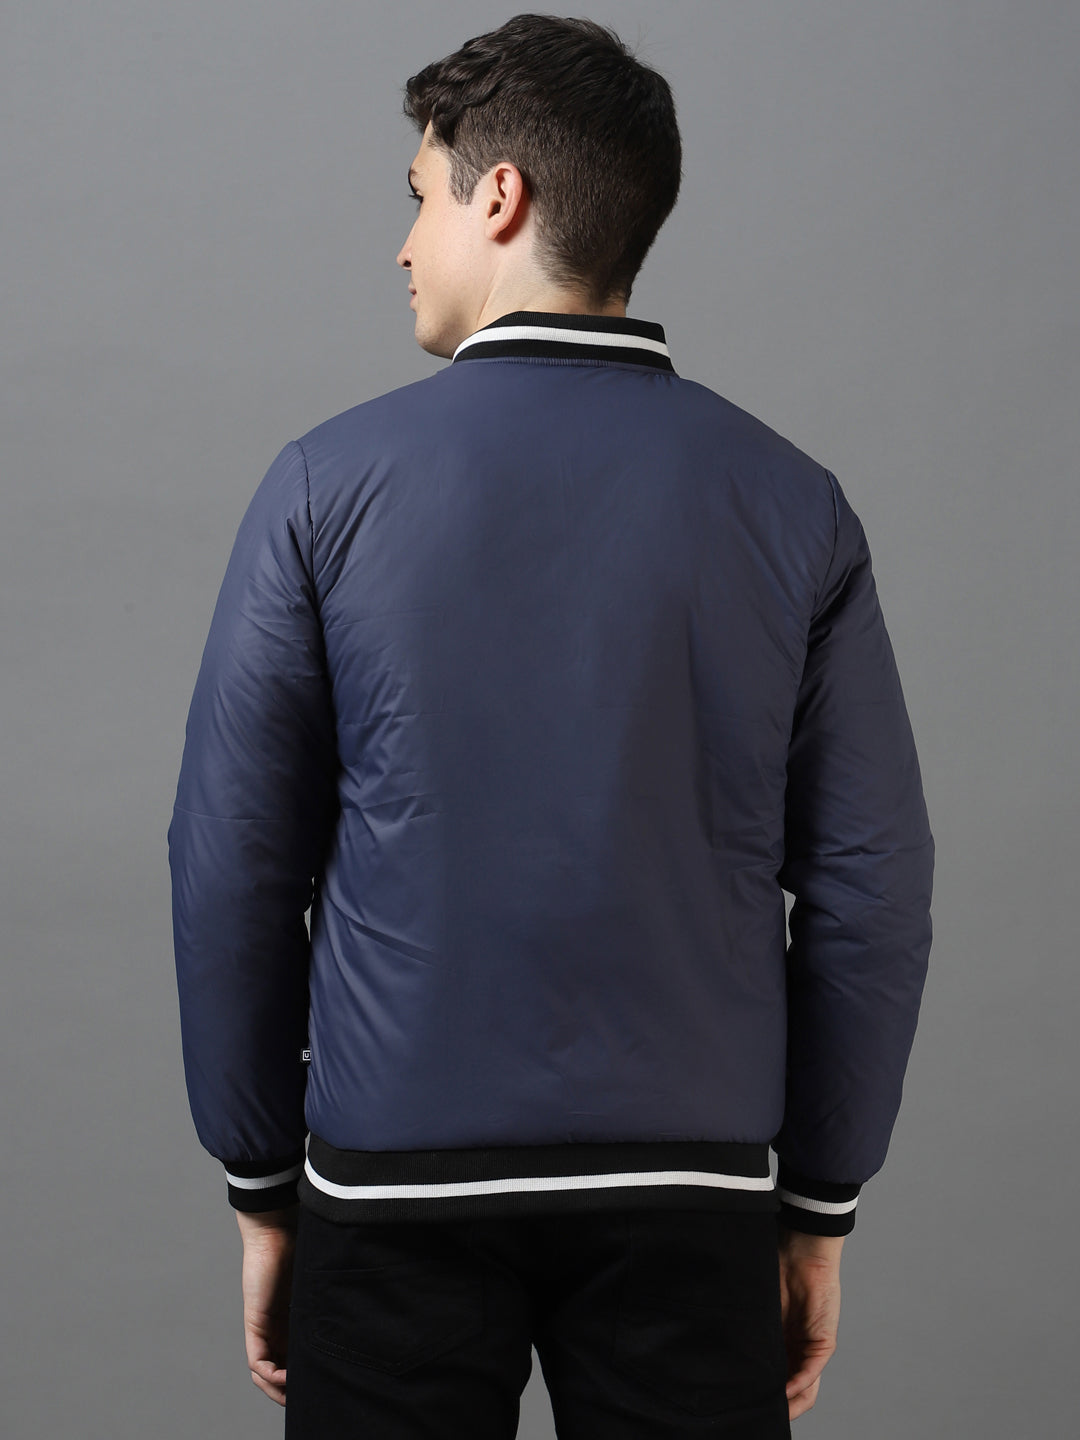 Urbano Fashion Men's Blue Full Sleeve Zippered Bomber Jacket